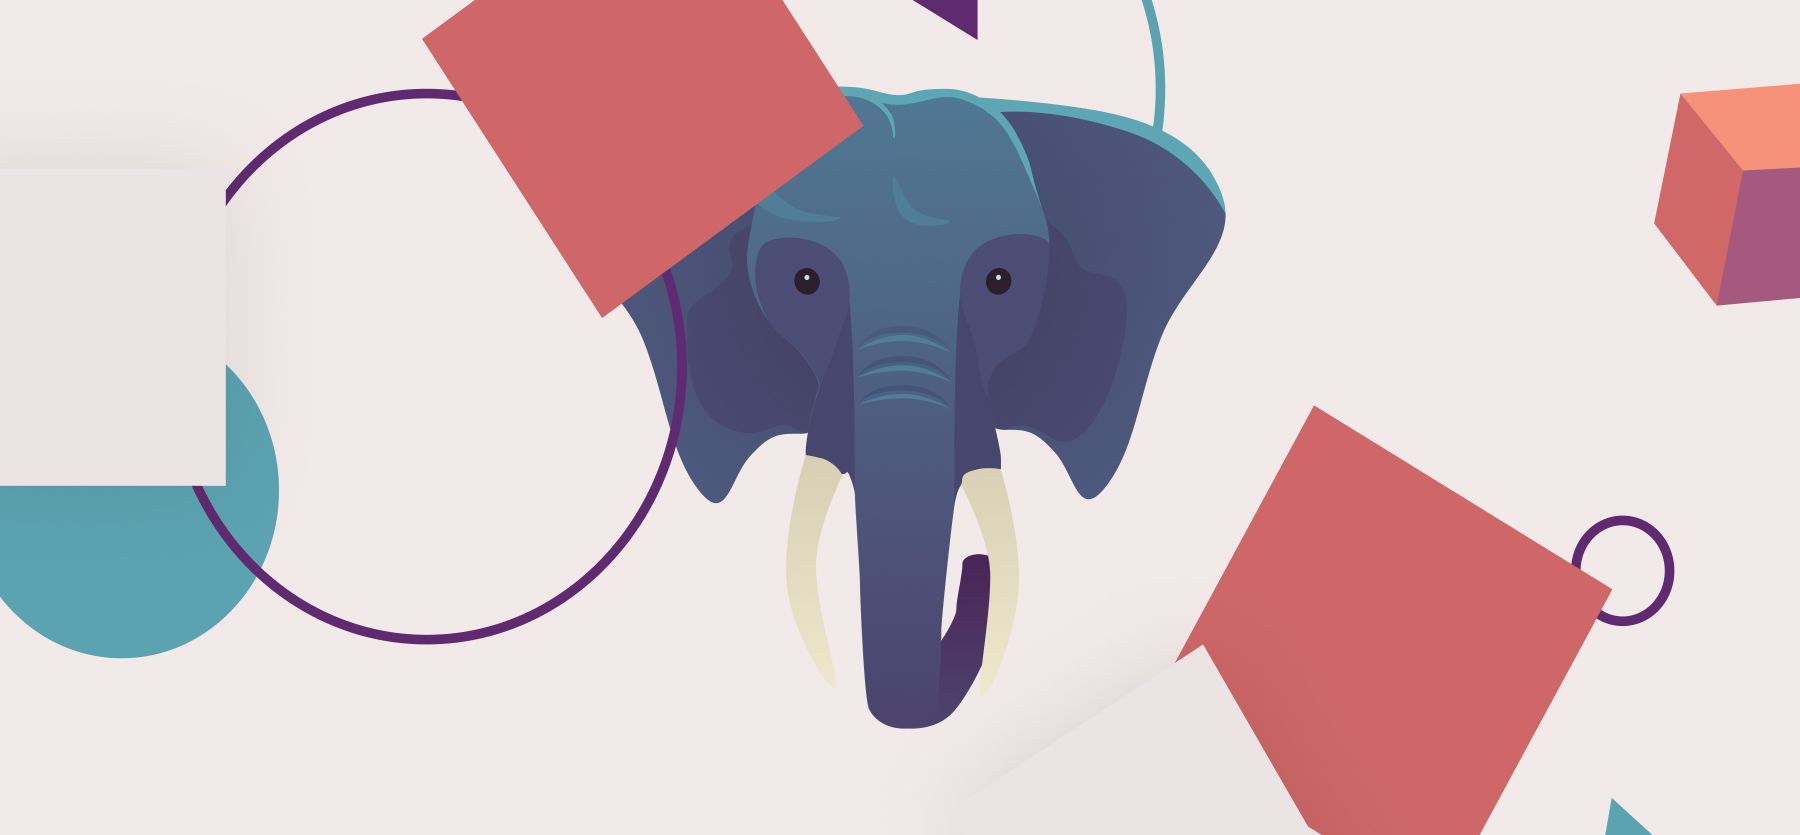 Elephant surrounded by geometric shapes